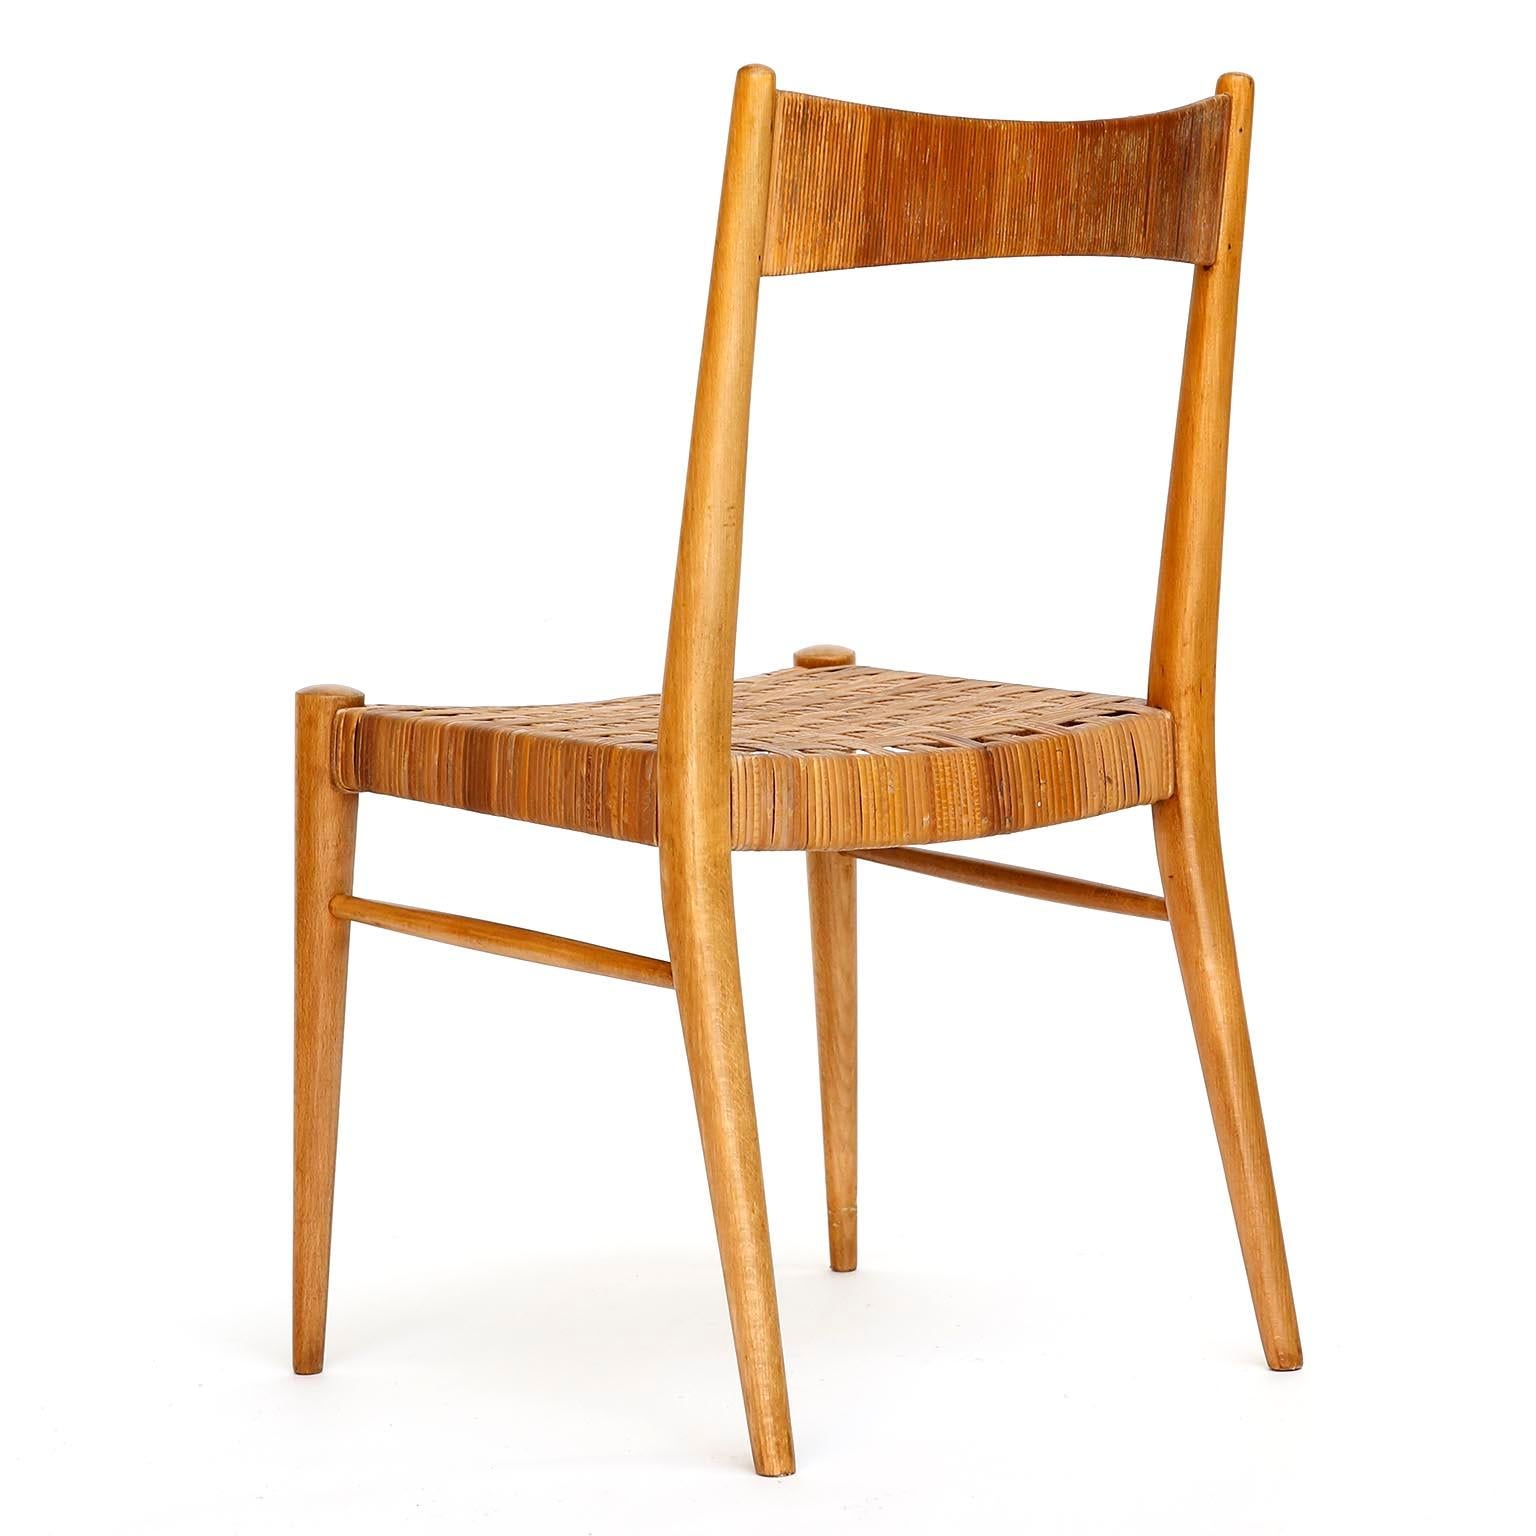 Four Anna-Lülja Praun Chairs, Wood Wicker Cane, 1950s For Sale 4